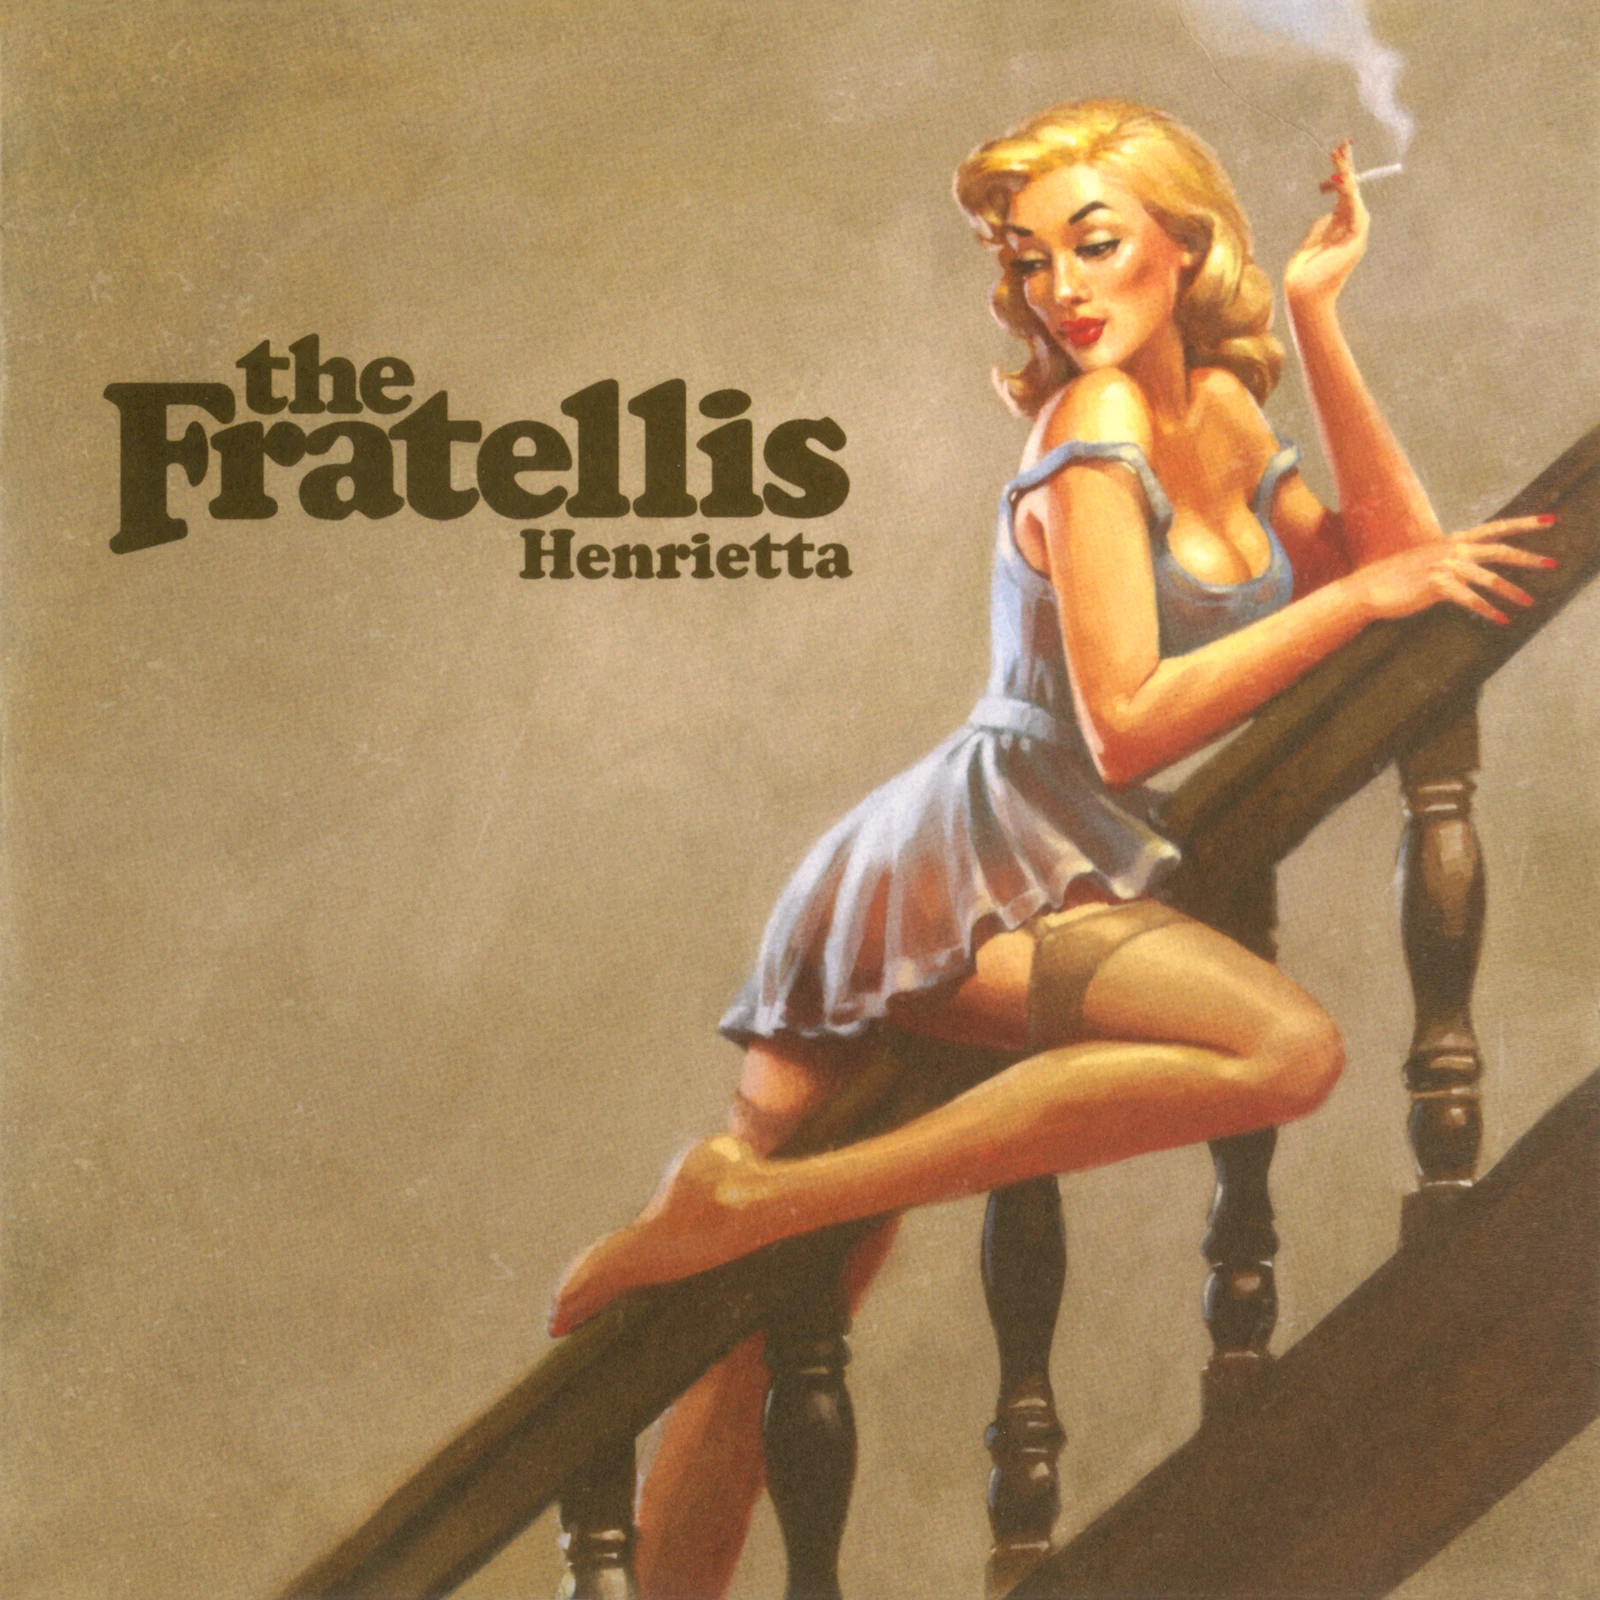 Henrietta – The Fratellis